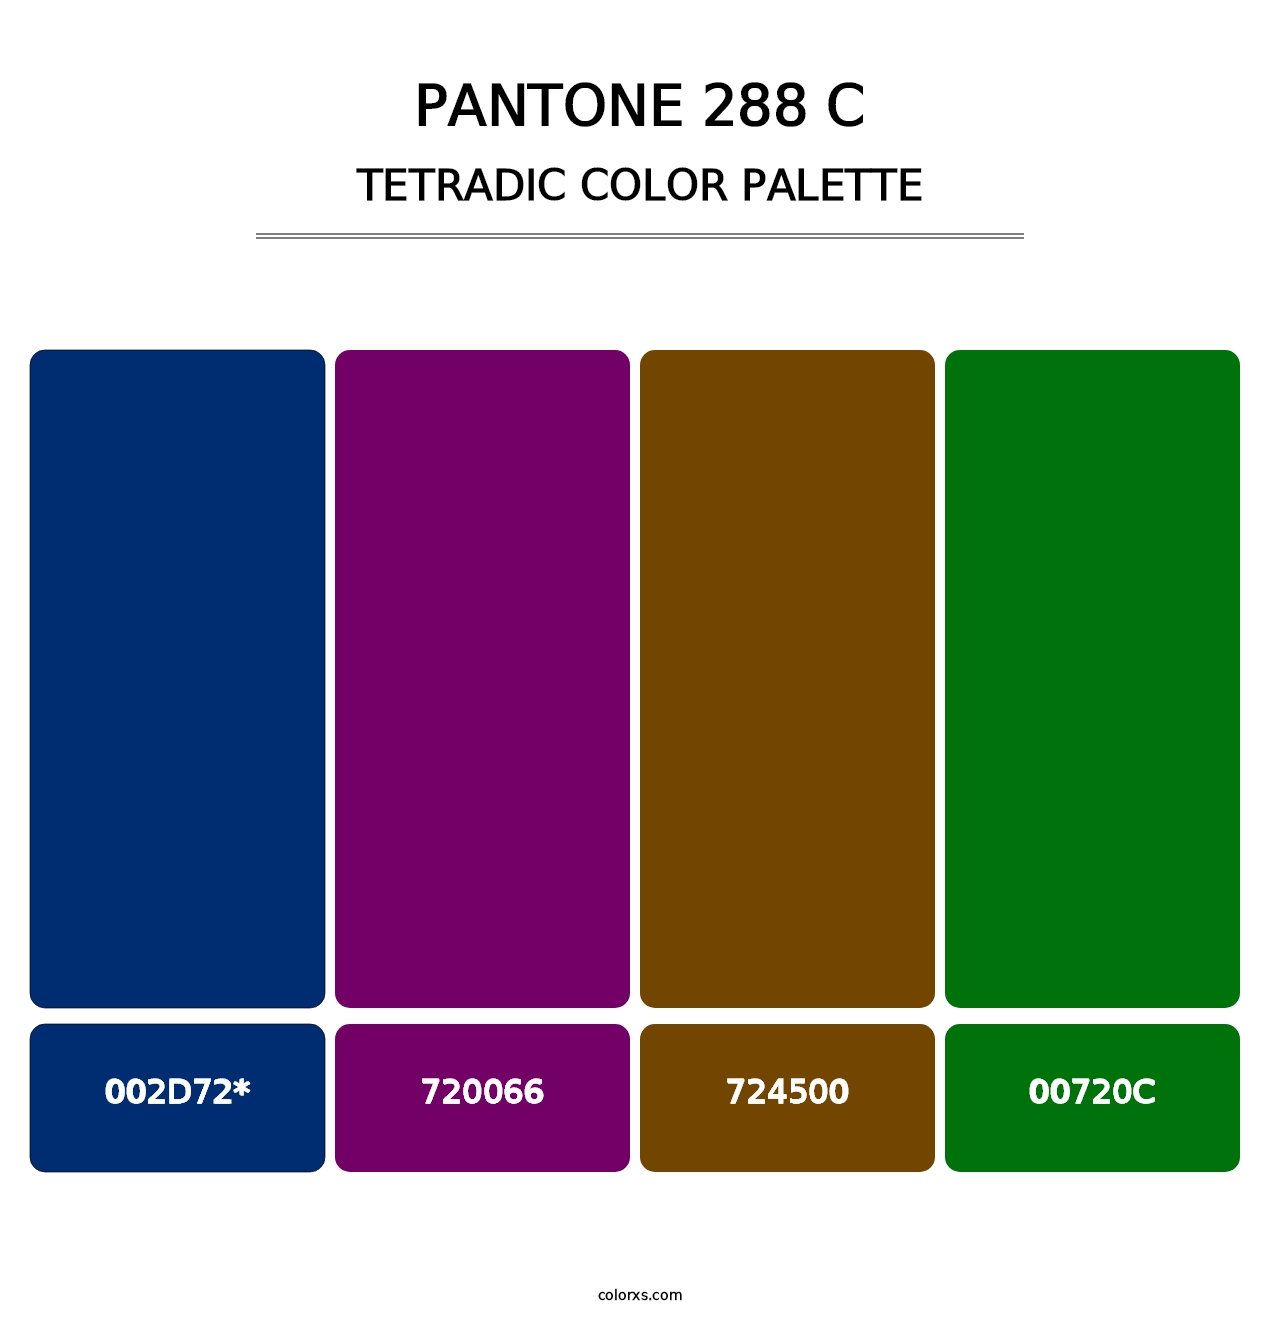 PANTONE 288 C - Tetradic Color Palette